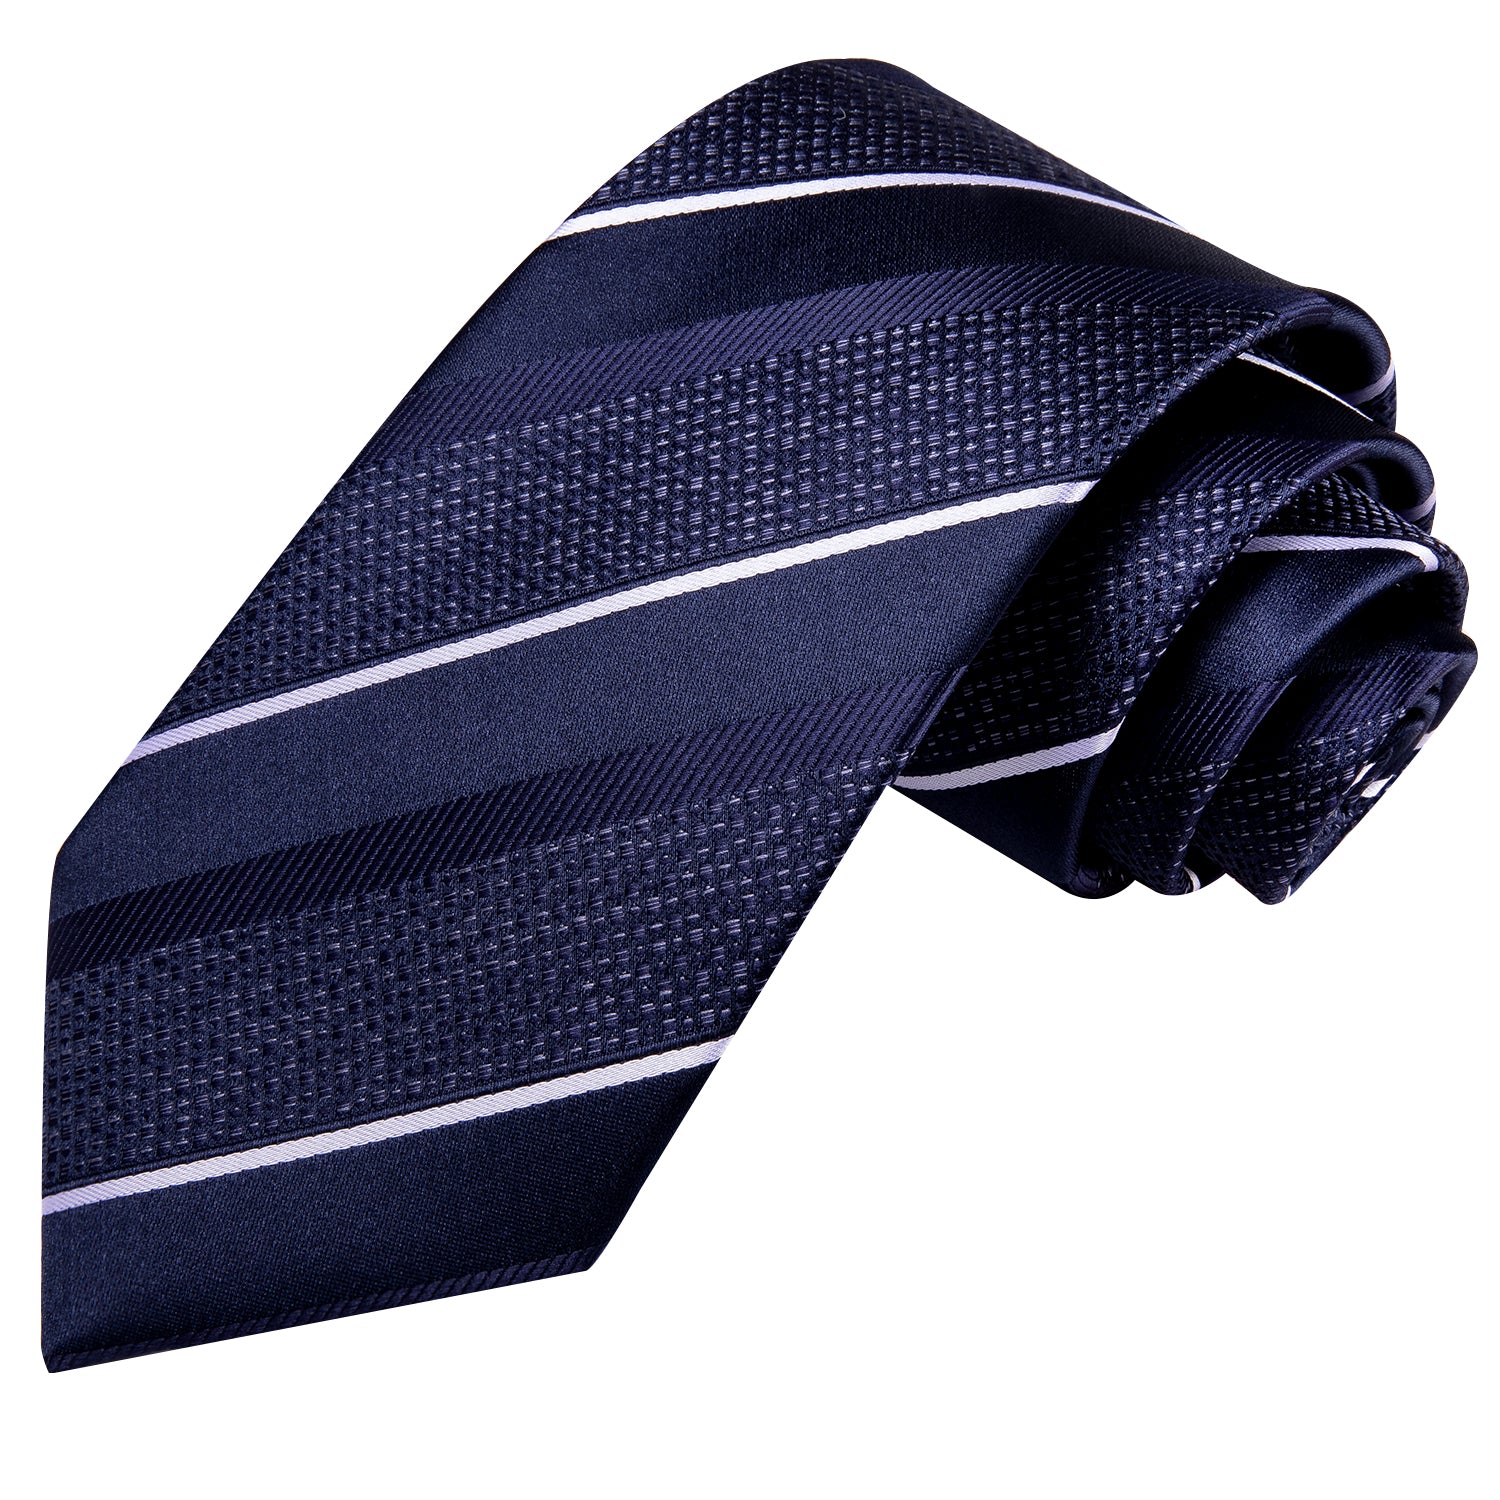 Deep Blue White Striped Tie Pocket Square Cufflinks Set